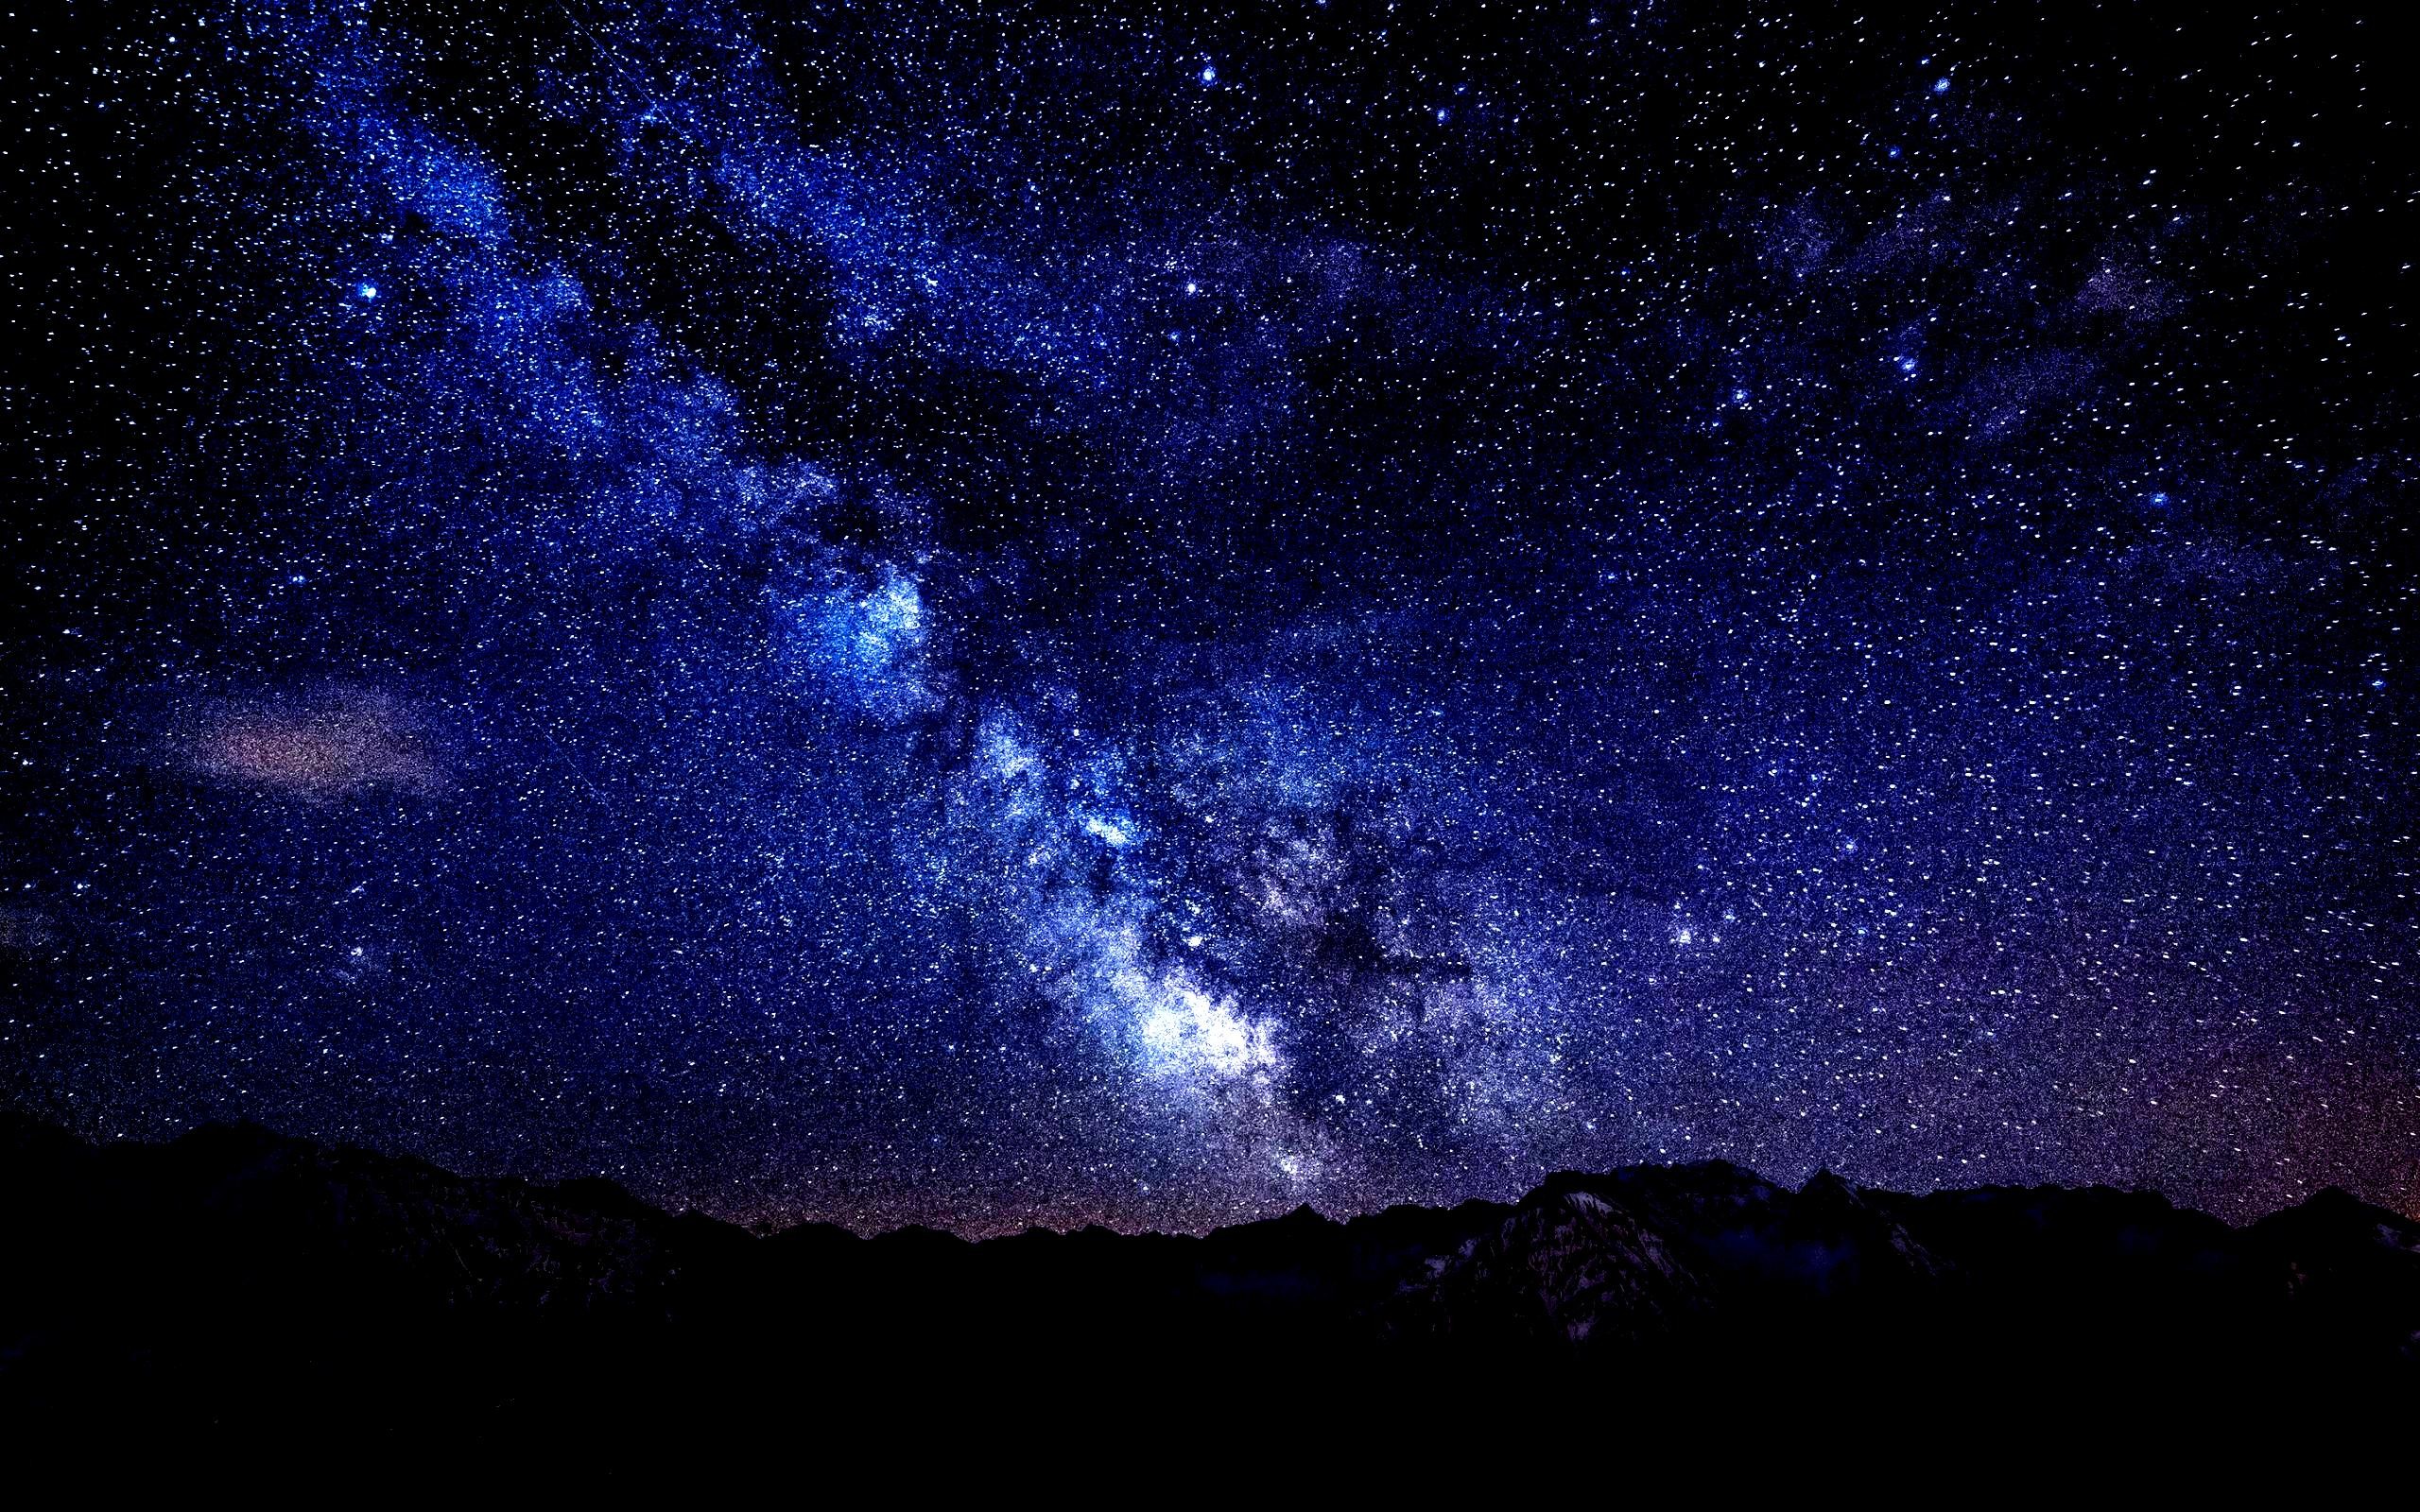 u2 wallpaper hd,himmel,blau,astronomisches objekt,atmosphäre,galaxis